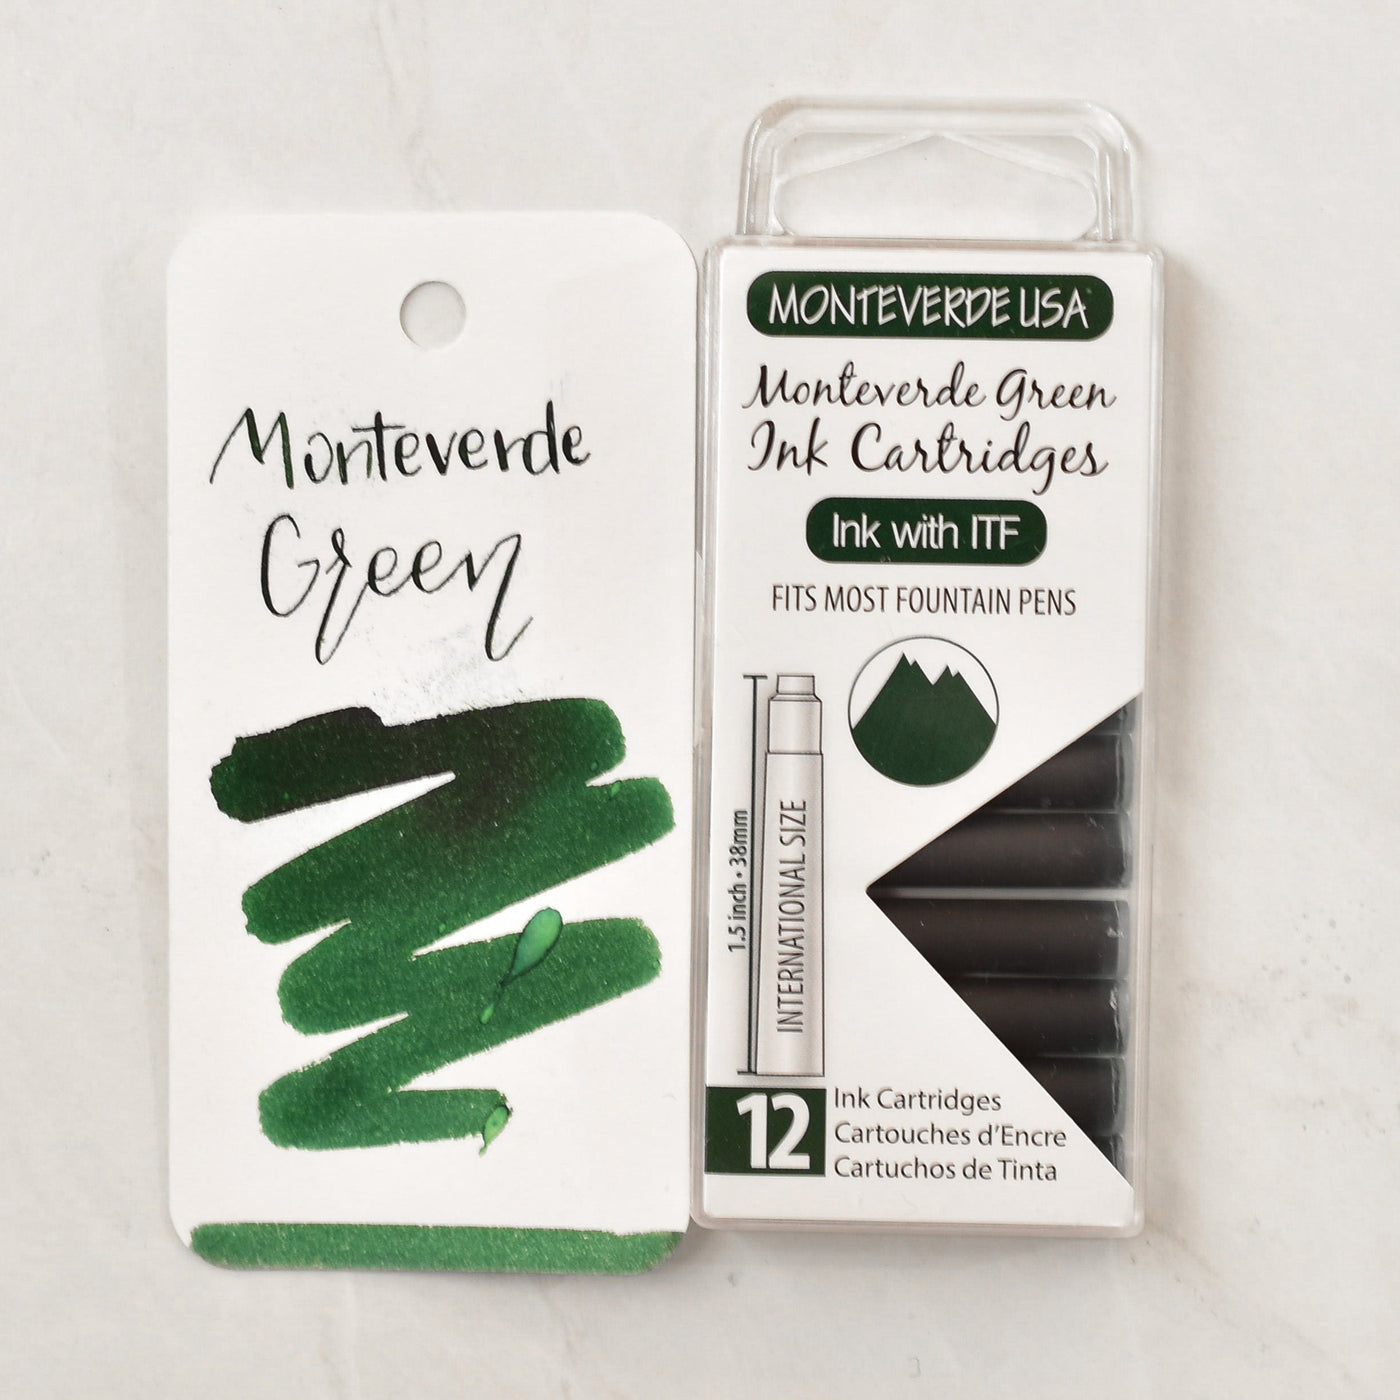 Monteverde Green Ink Cartridges